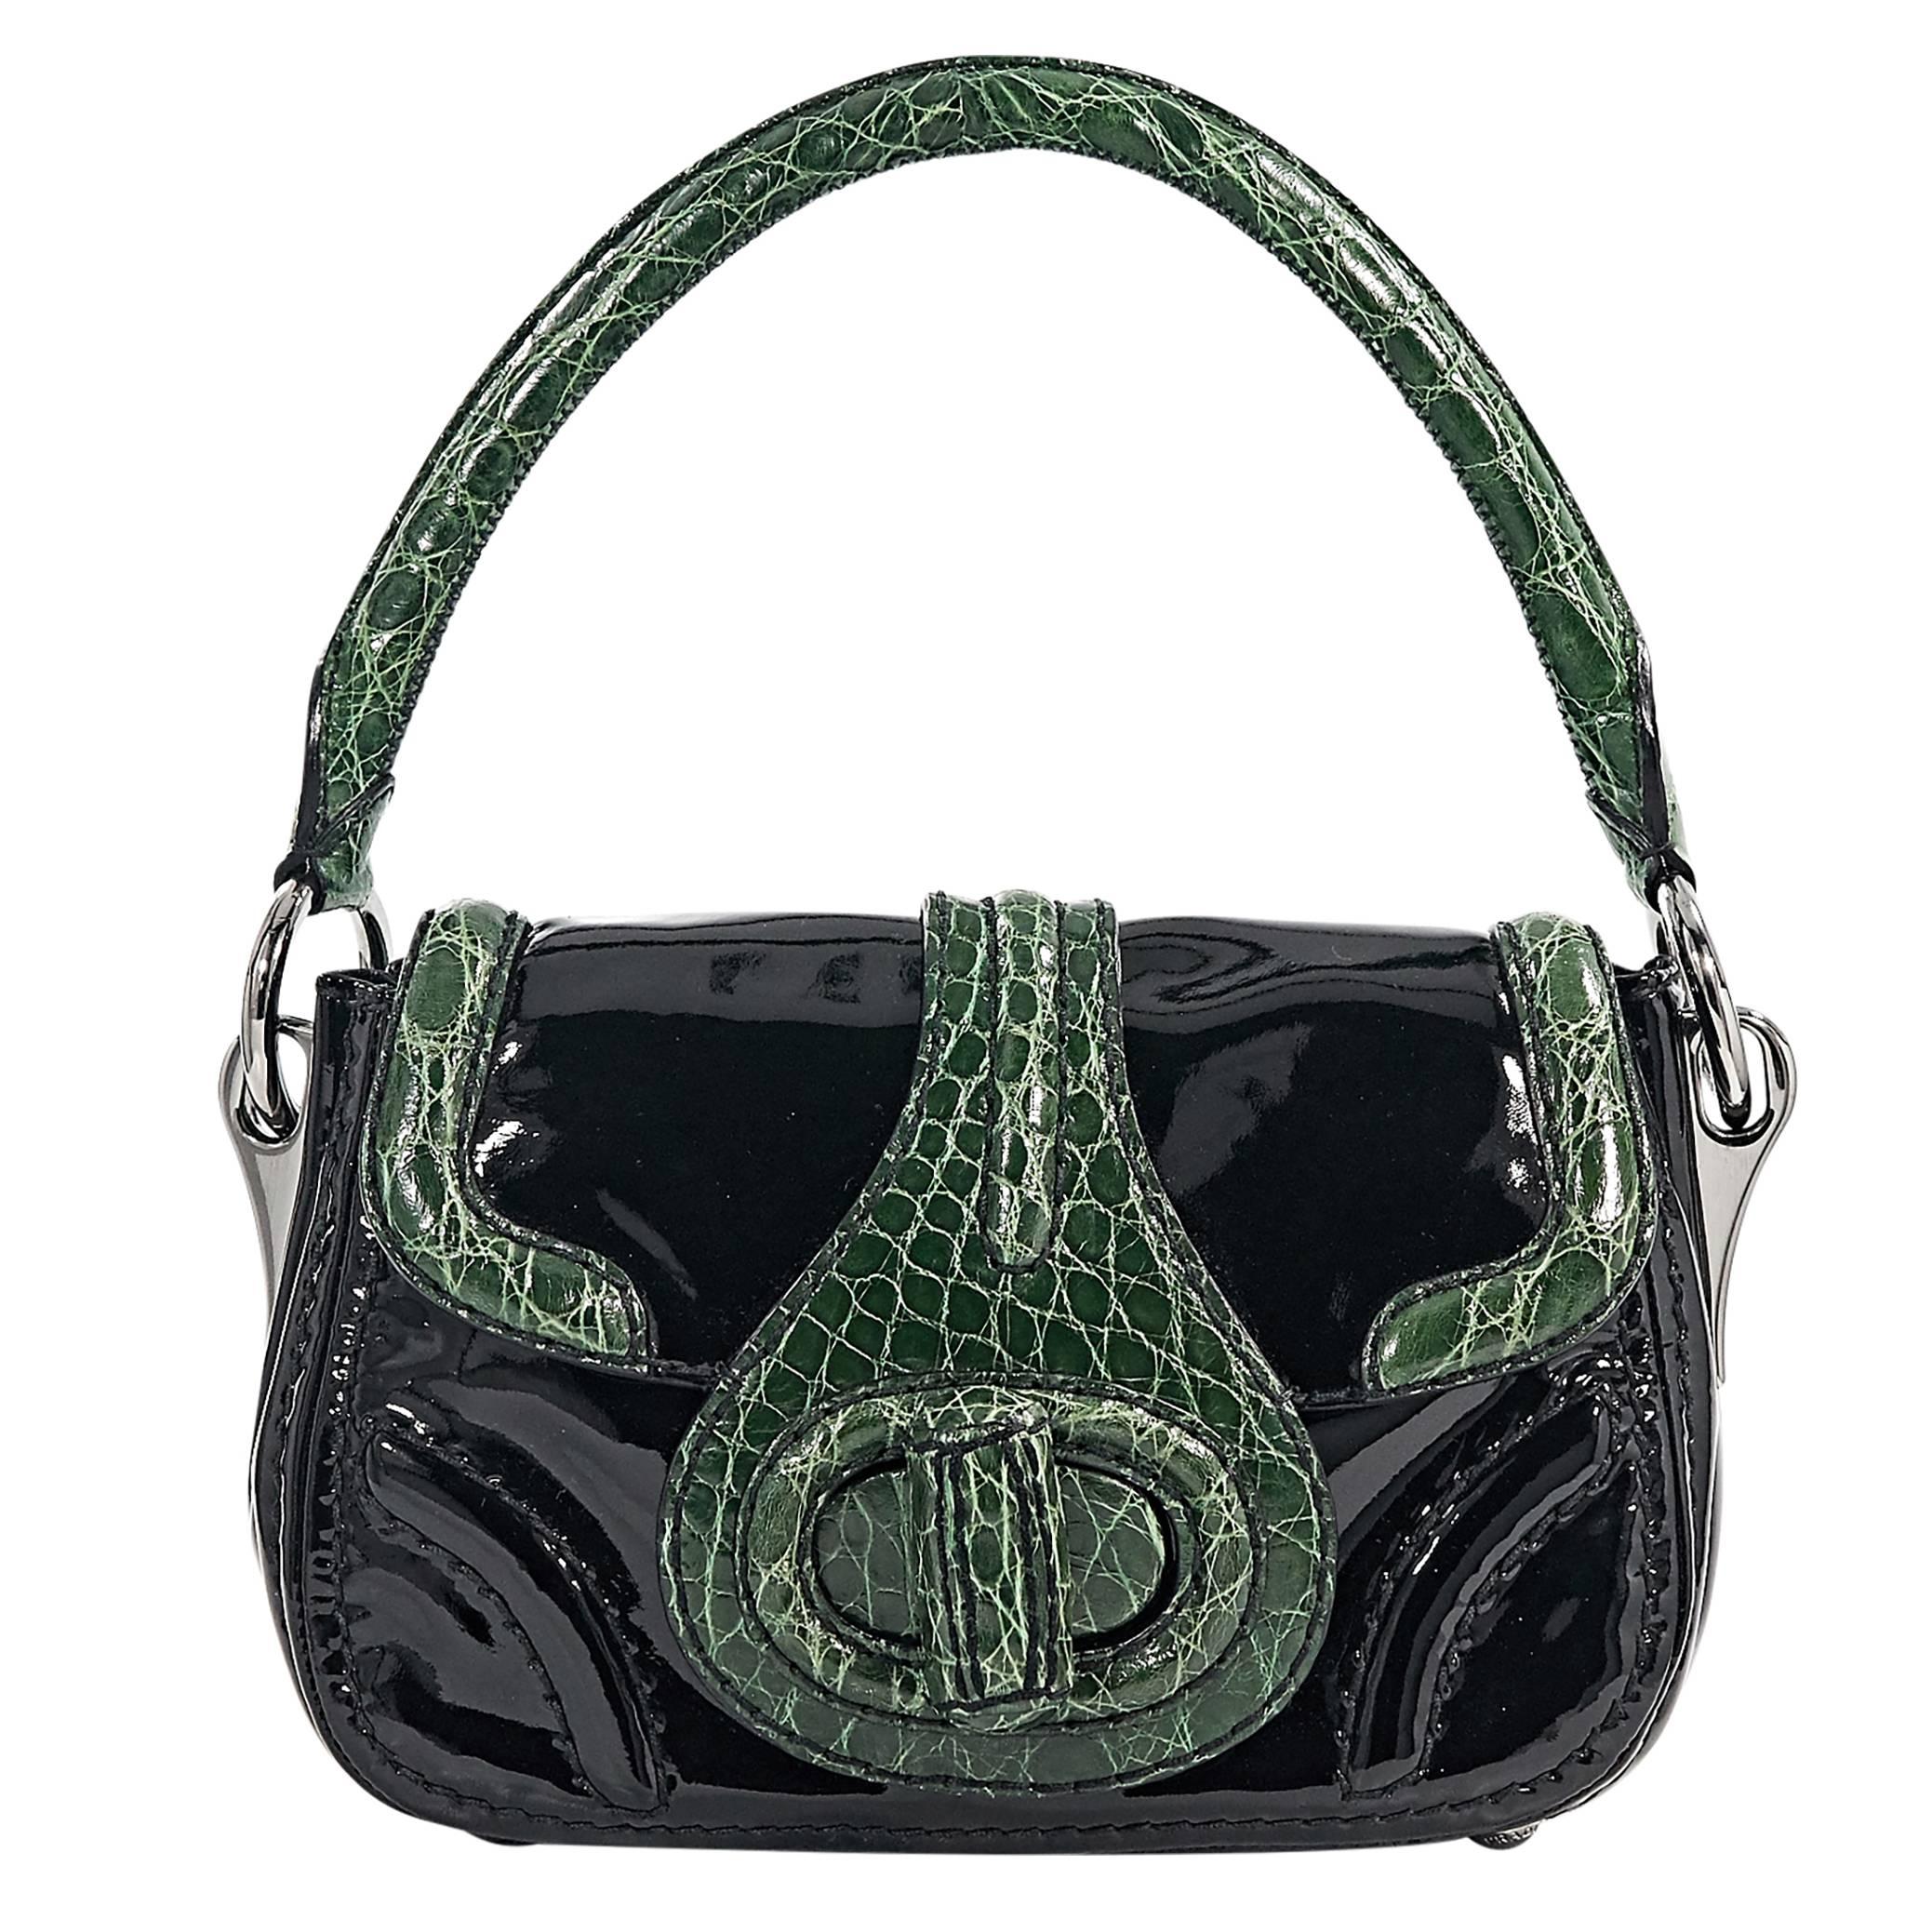 Black & Green Prada Crocodile-Trimmed Handbag